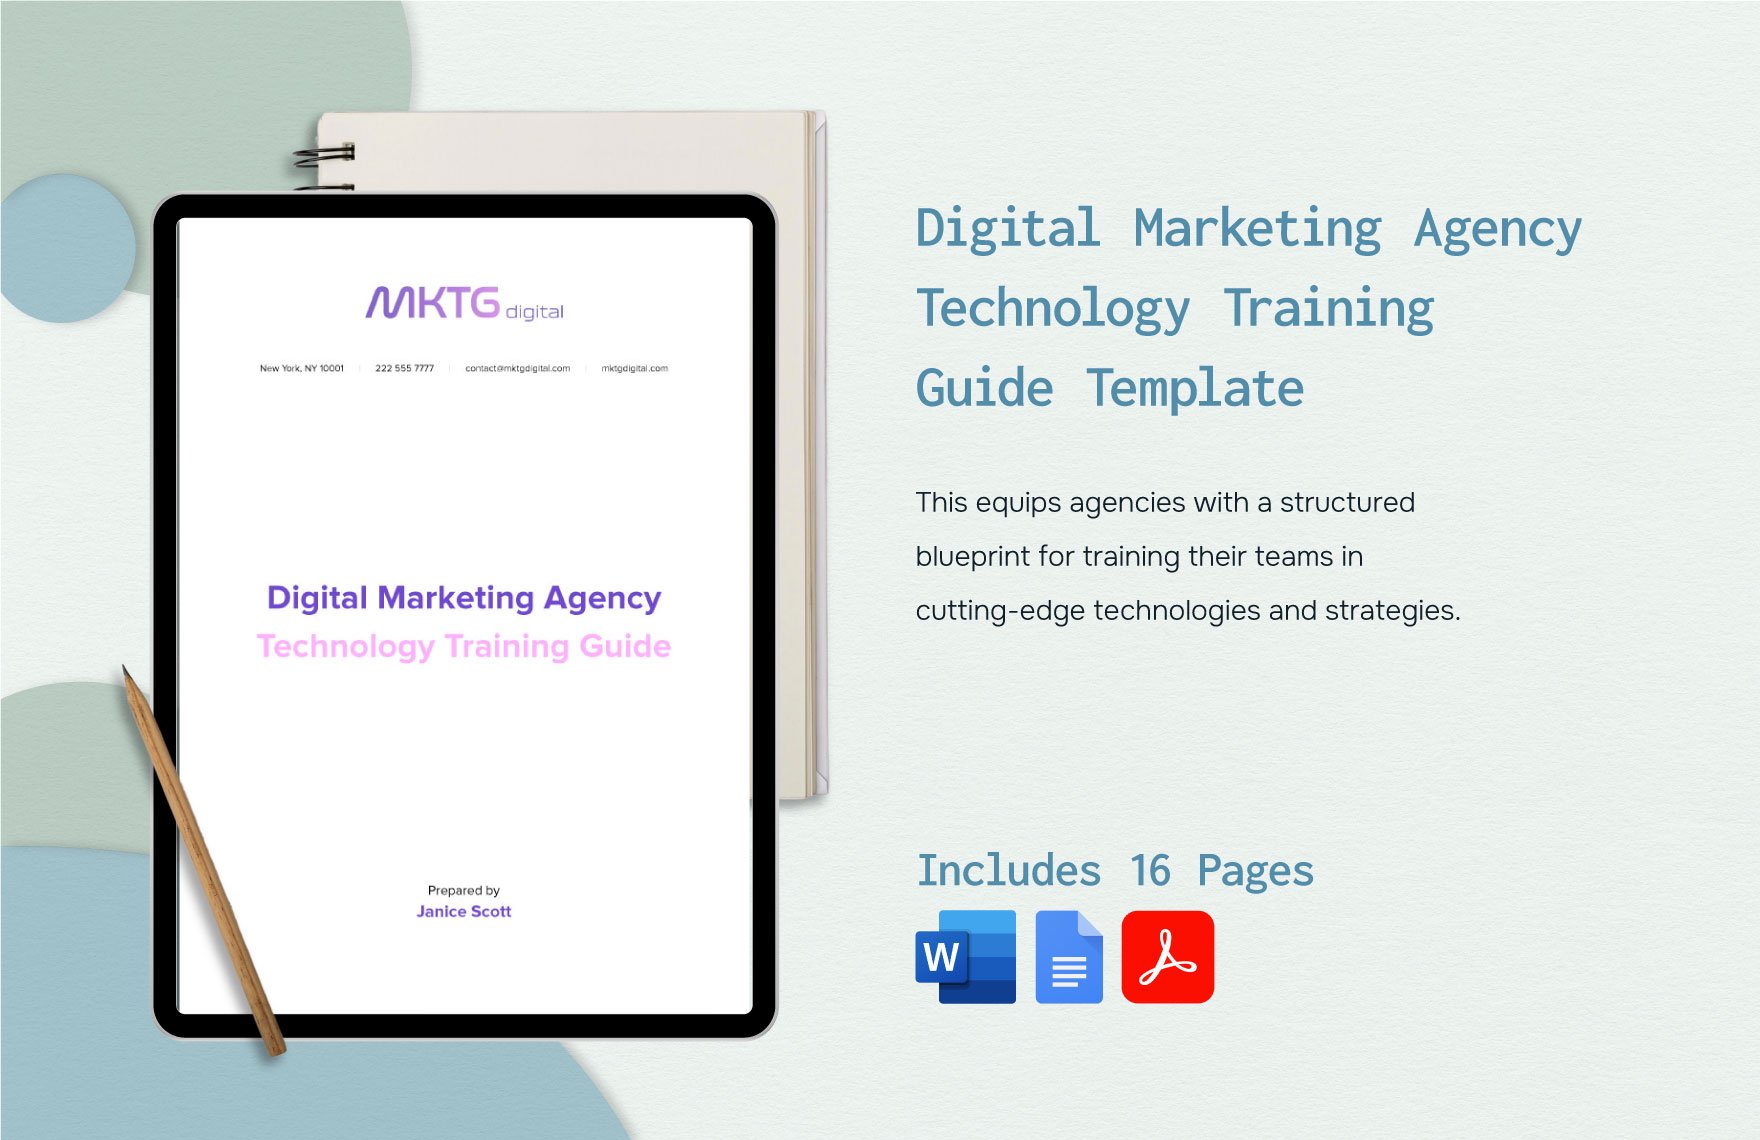 Digital Marketing Agency Technology Training Guide Template